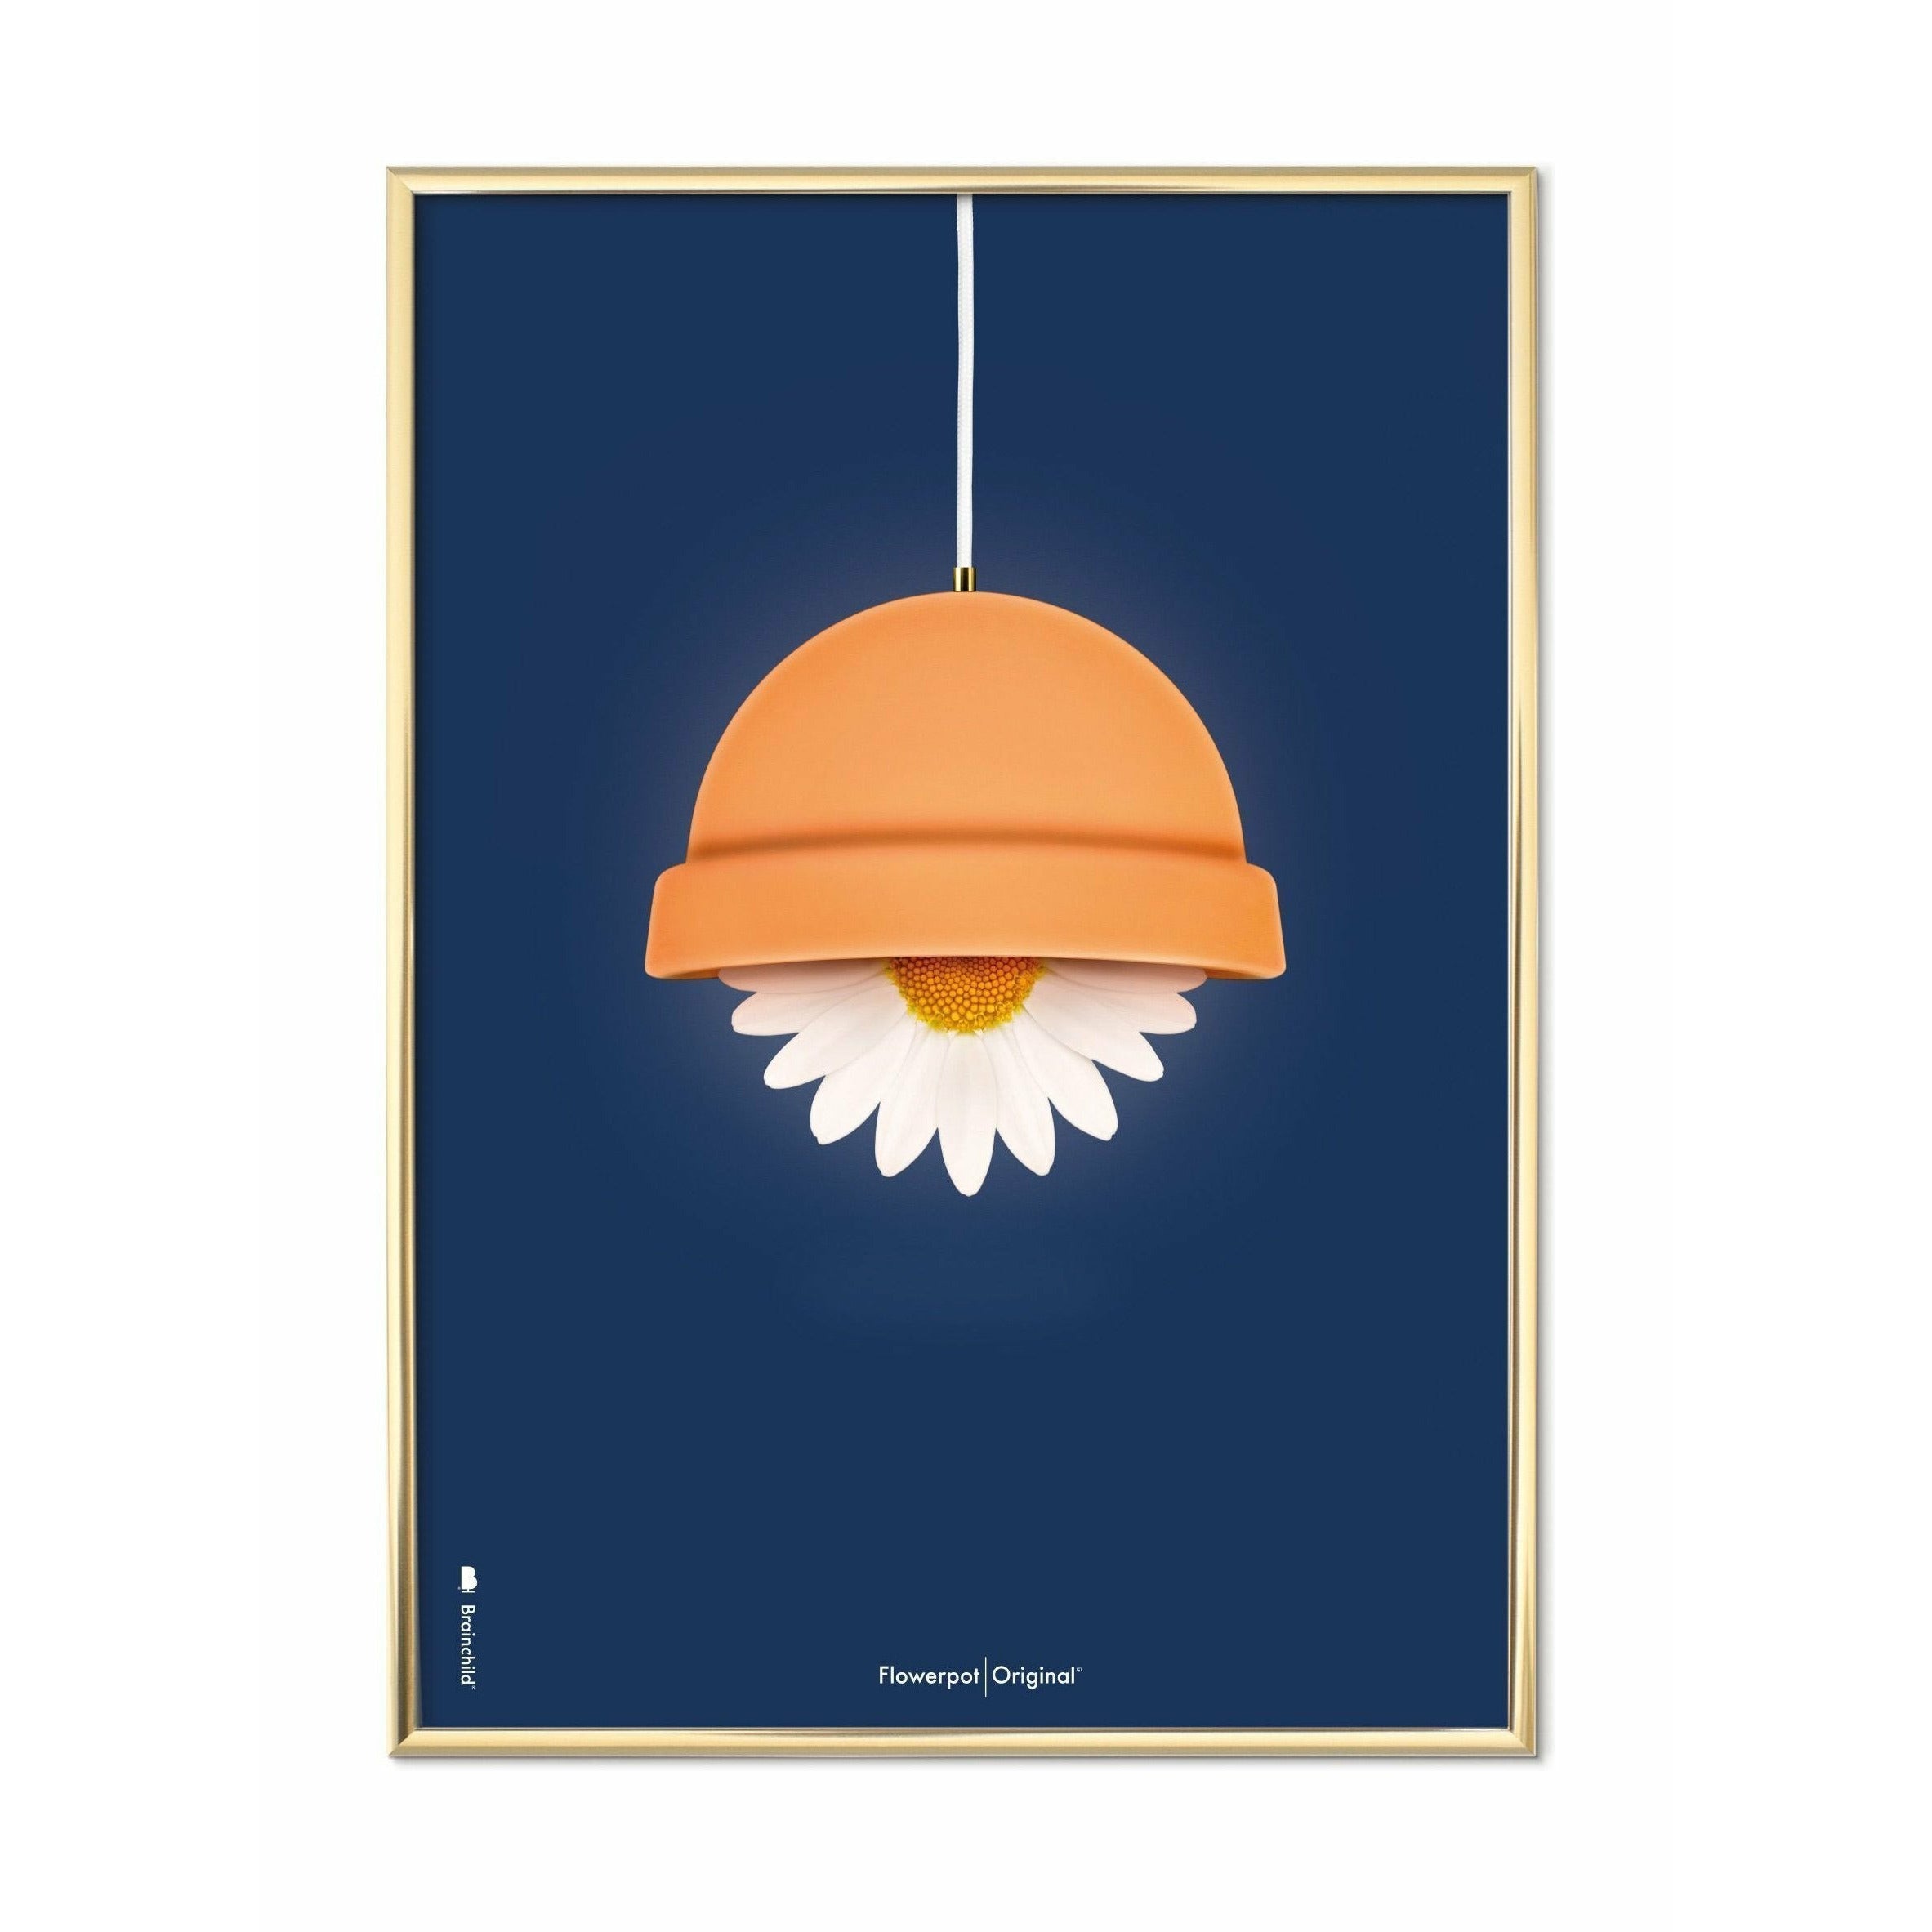 Brainchild Flowerpot Classic Poster, Brass Colored Frame A5, Dark Blue Background